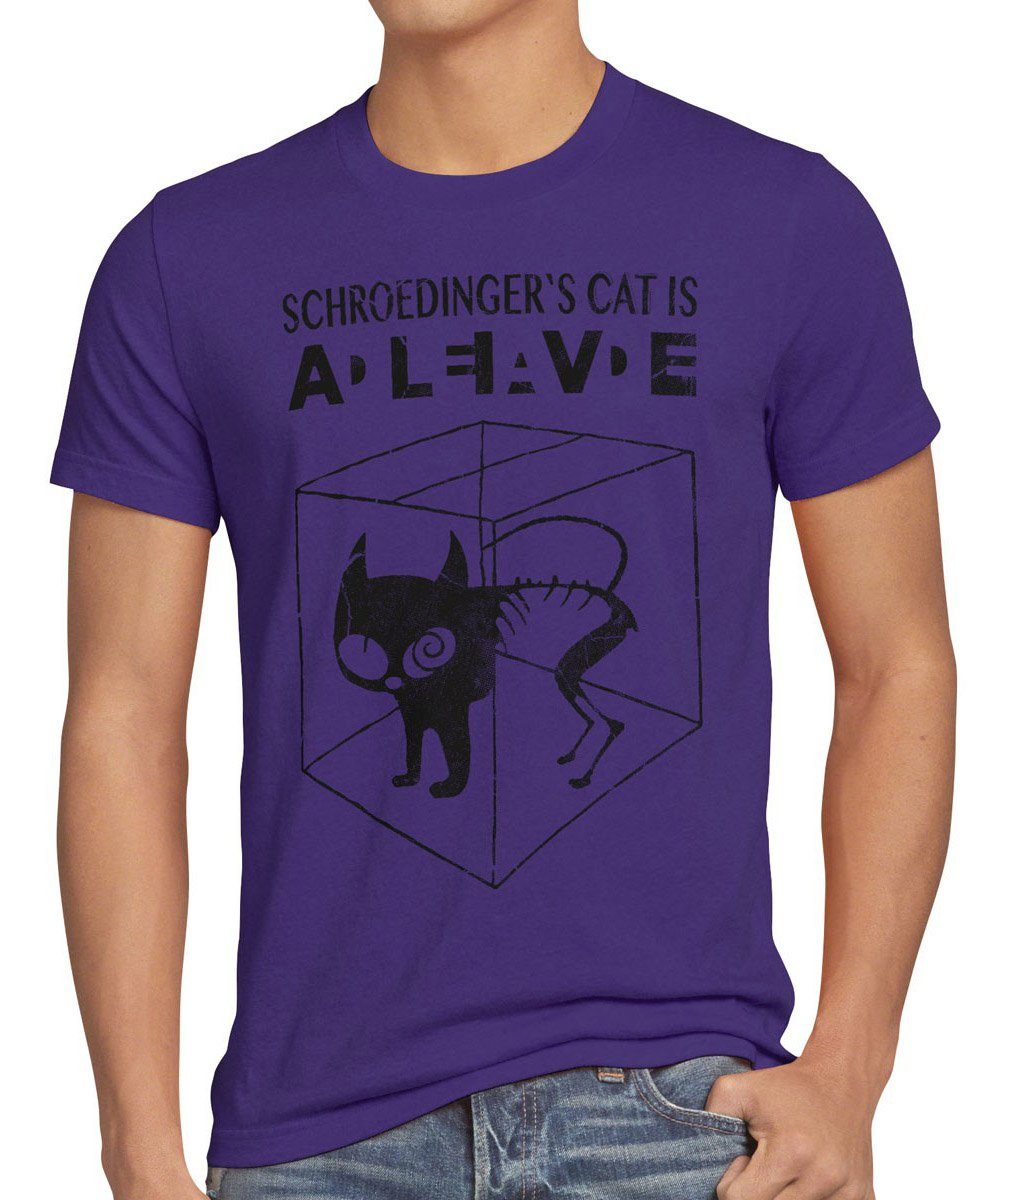 style3 Print-Shirt Herren T-Shirt Schroedinger's Katze Big Bang Sheldon schrödingers Theory cat neu lila